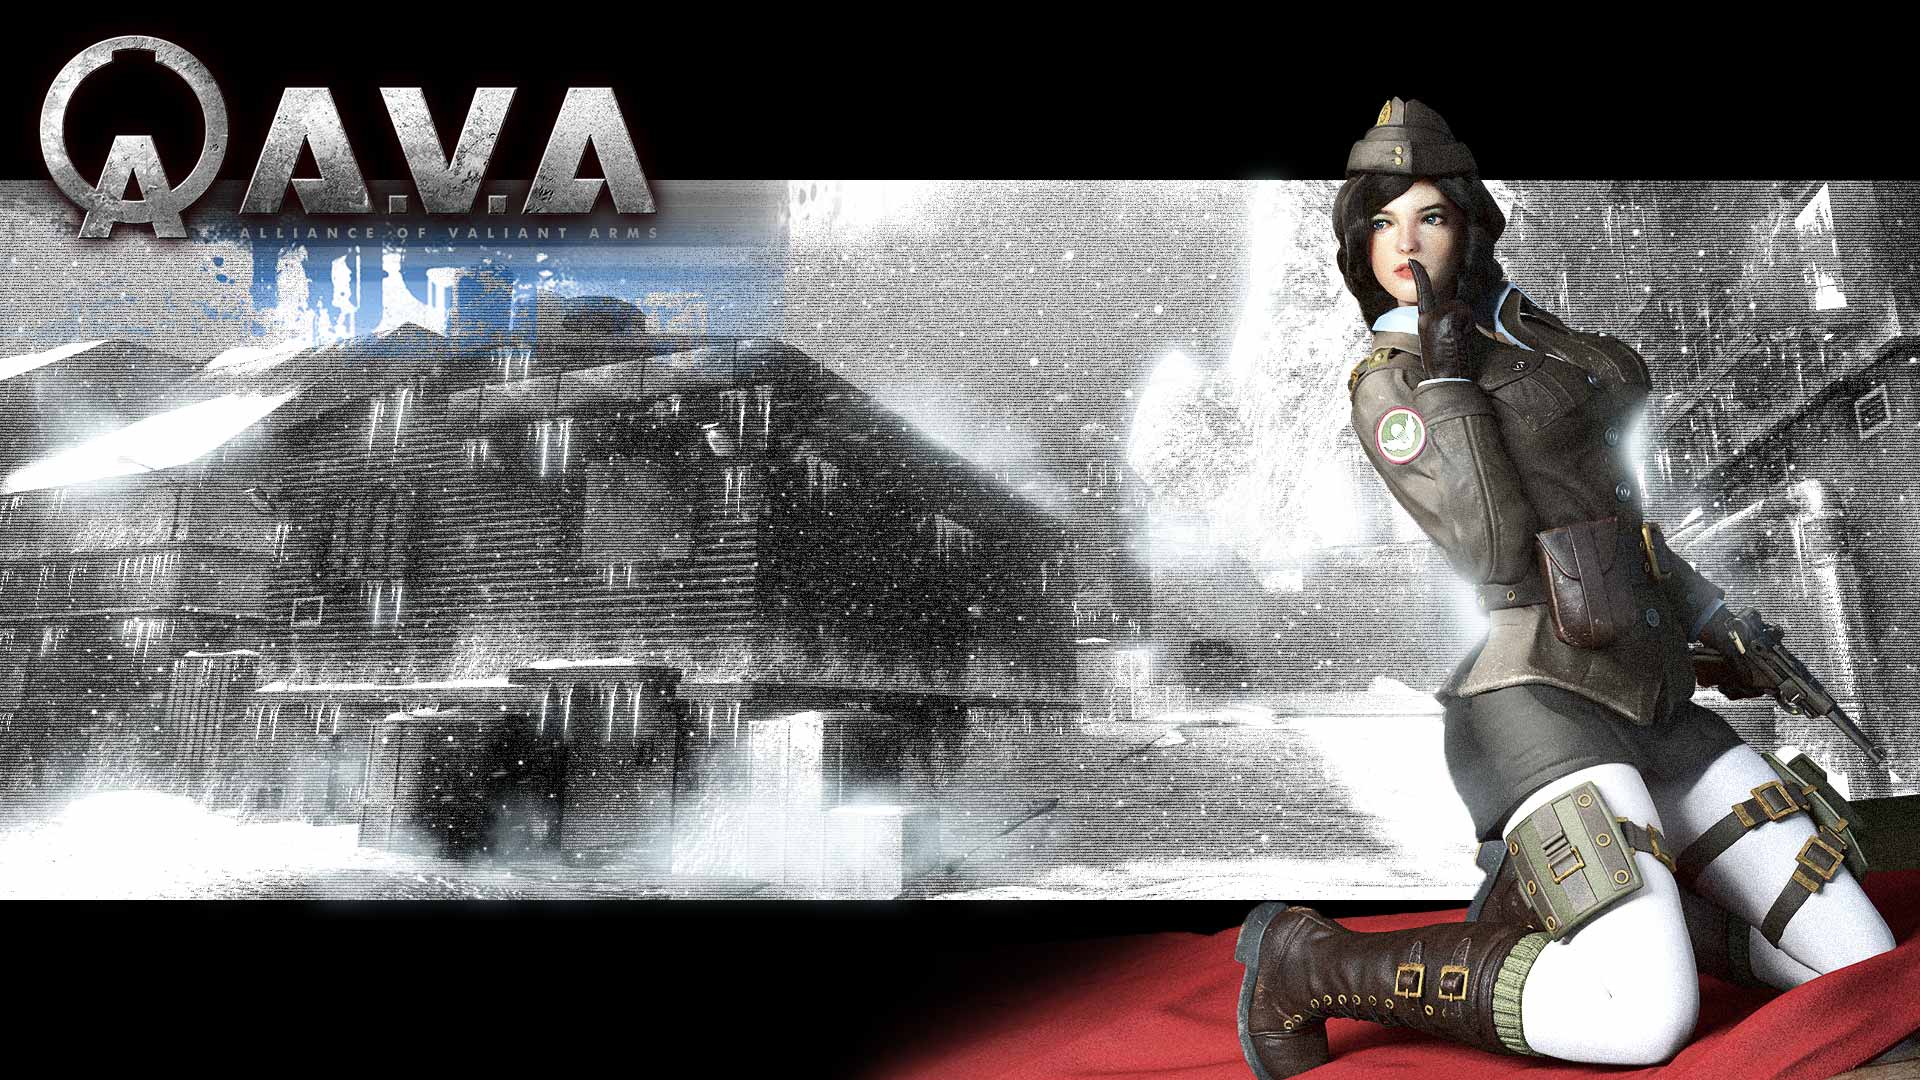 A.V.A - Alliance of Valiant Arms - Anastasia | Steam Trading Cards